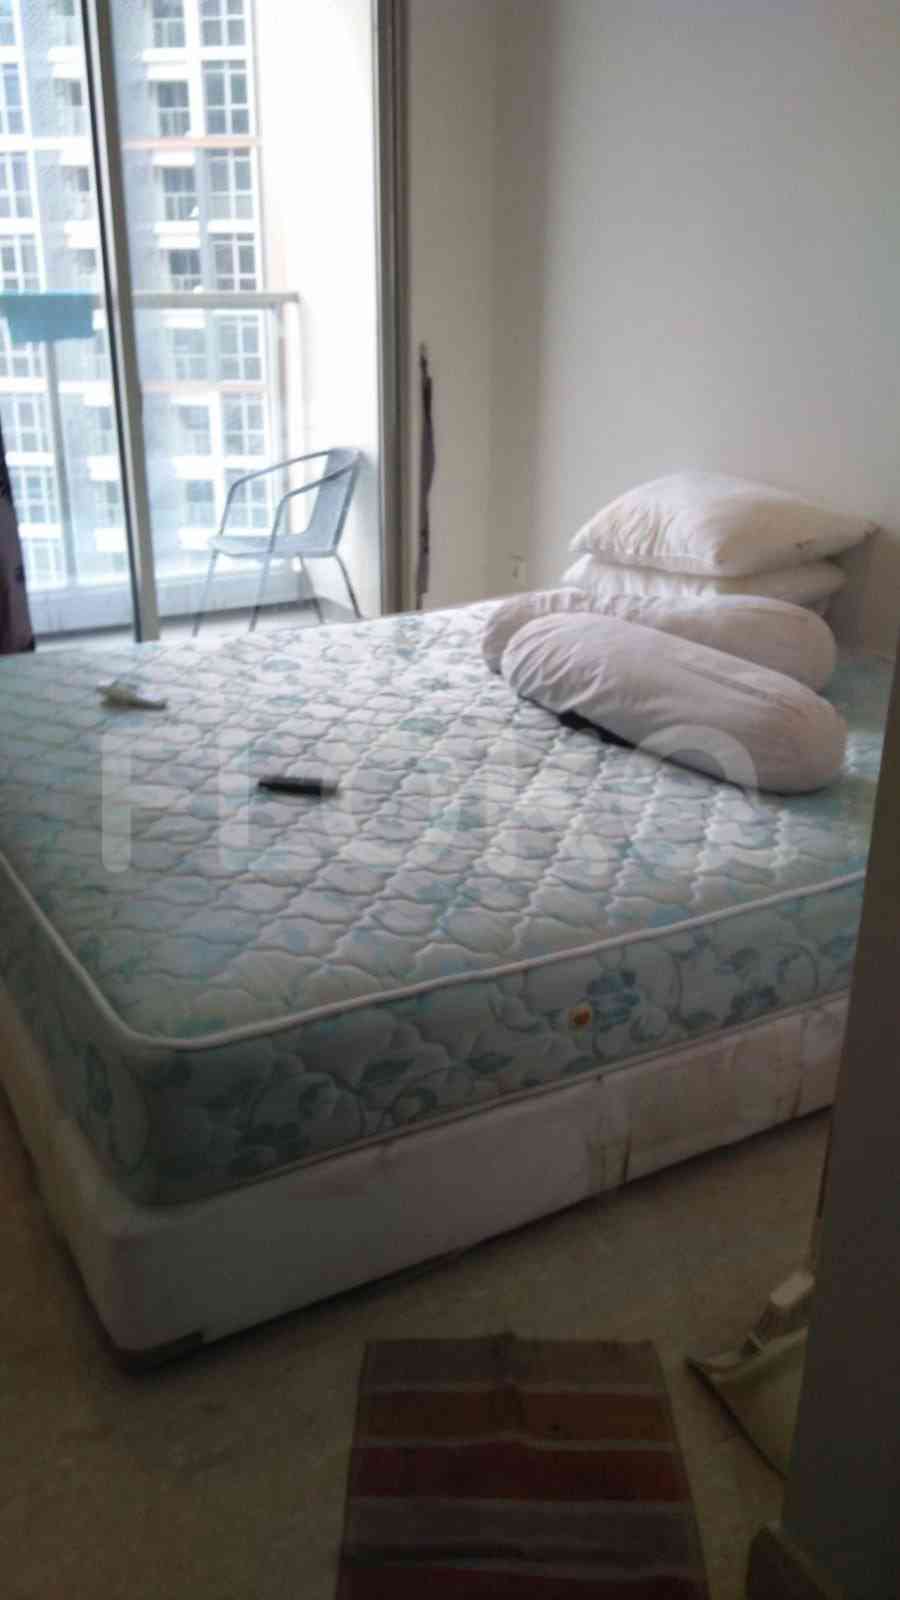 Tipe 1 Kamar Tidur di Lantai 27 untuk disewakan di Gold Coast Apartemen - fkaa9b 5